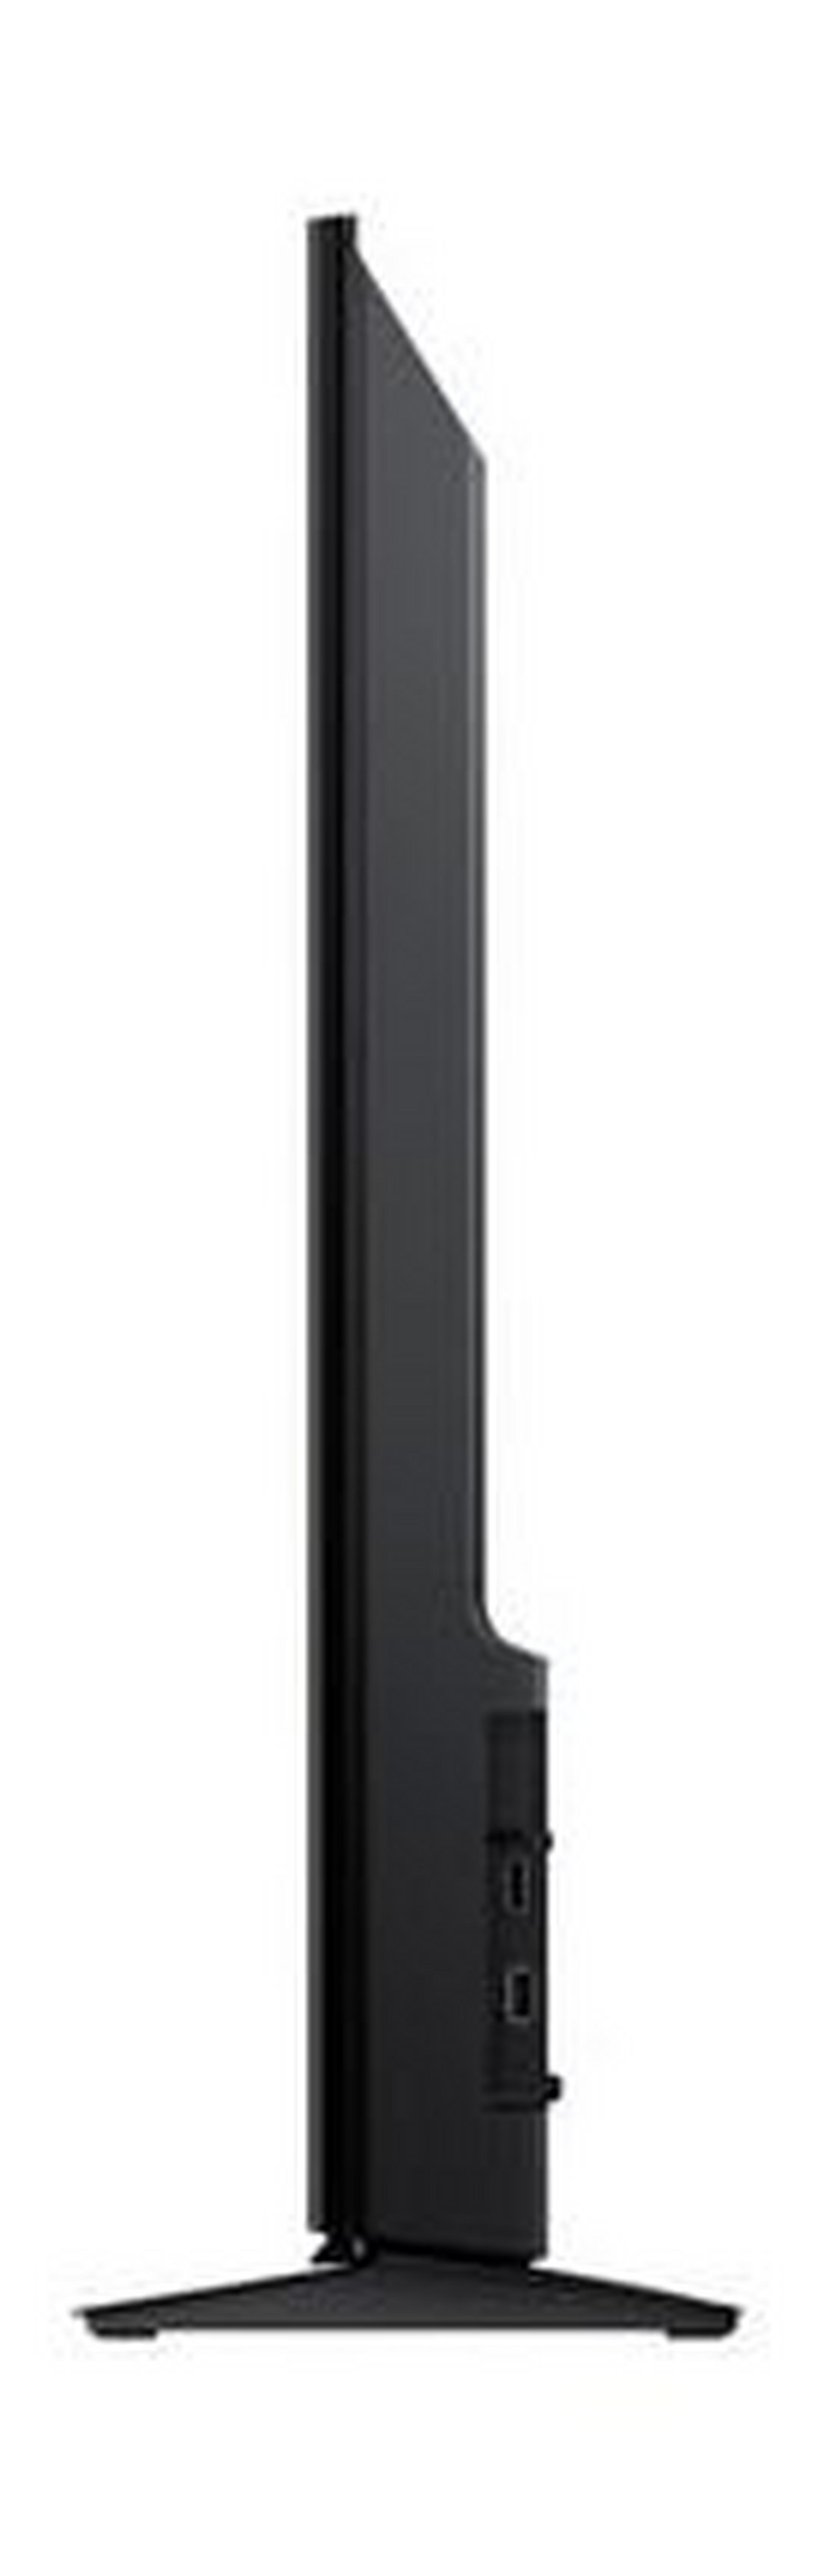 Sony Bravia 40-inch Full-HD LED TV - Black KDL-40R470B